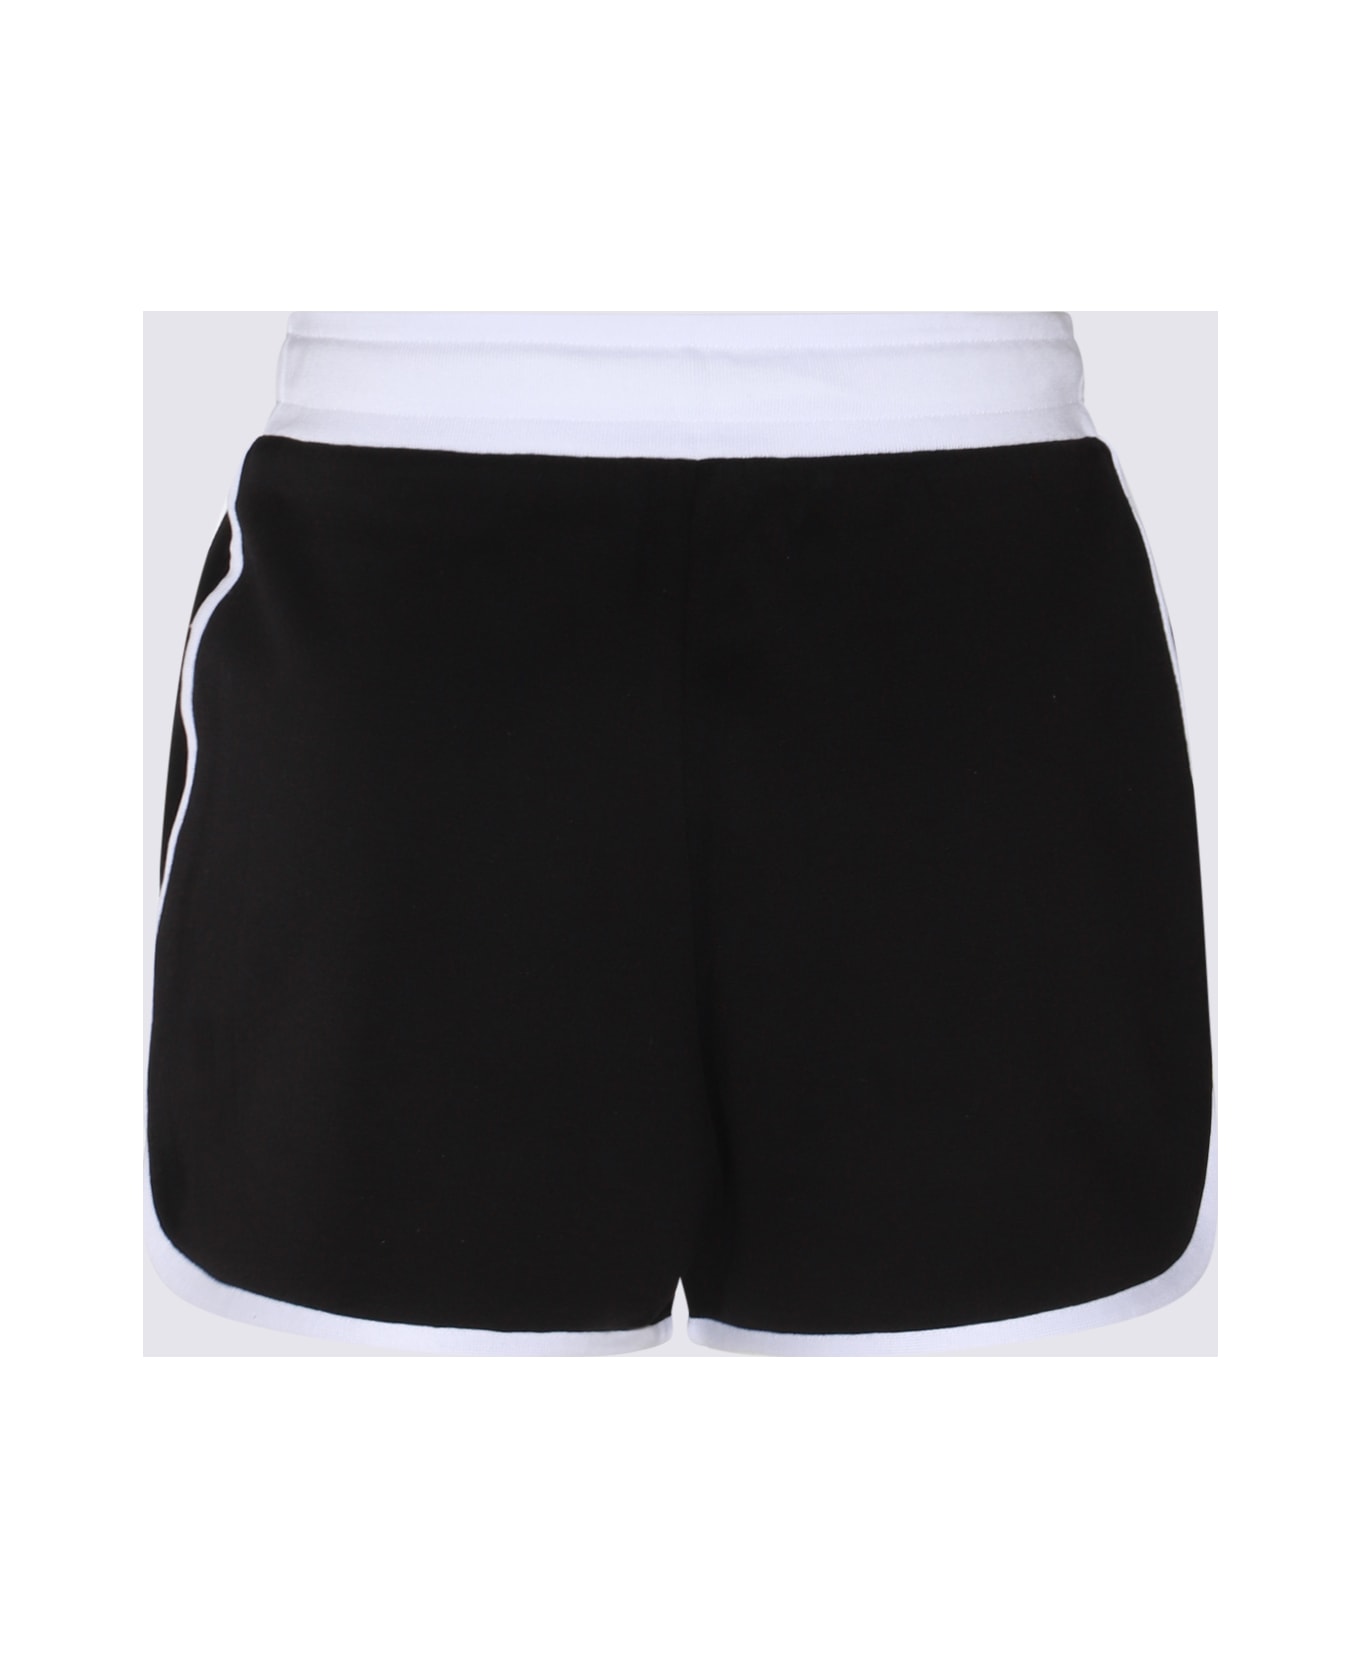 Dolce & Gabbana Black And White Cotton Blend Track Shorts - Nero/bianco